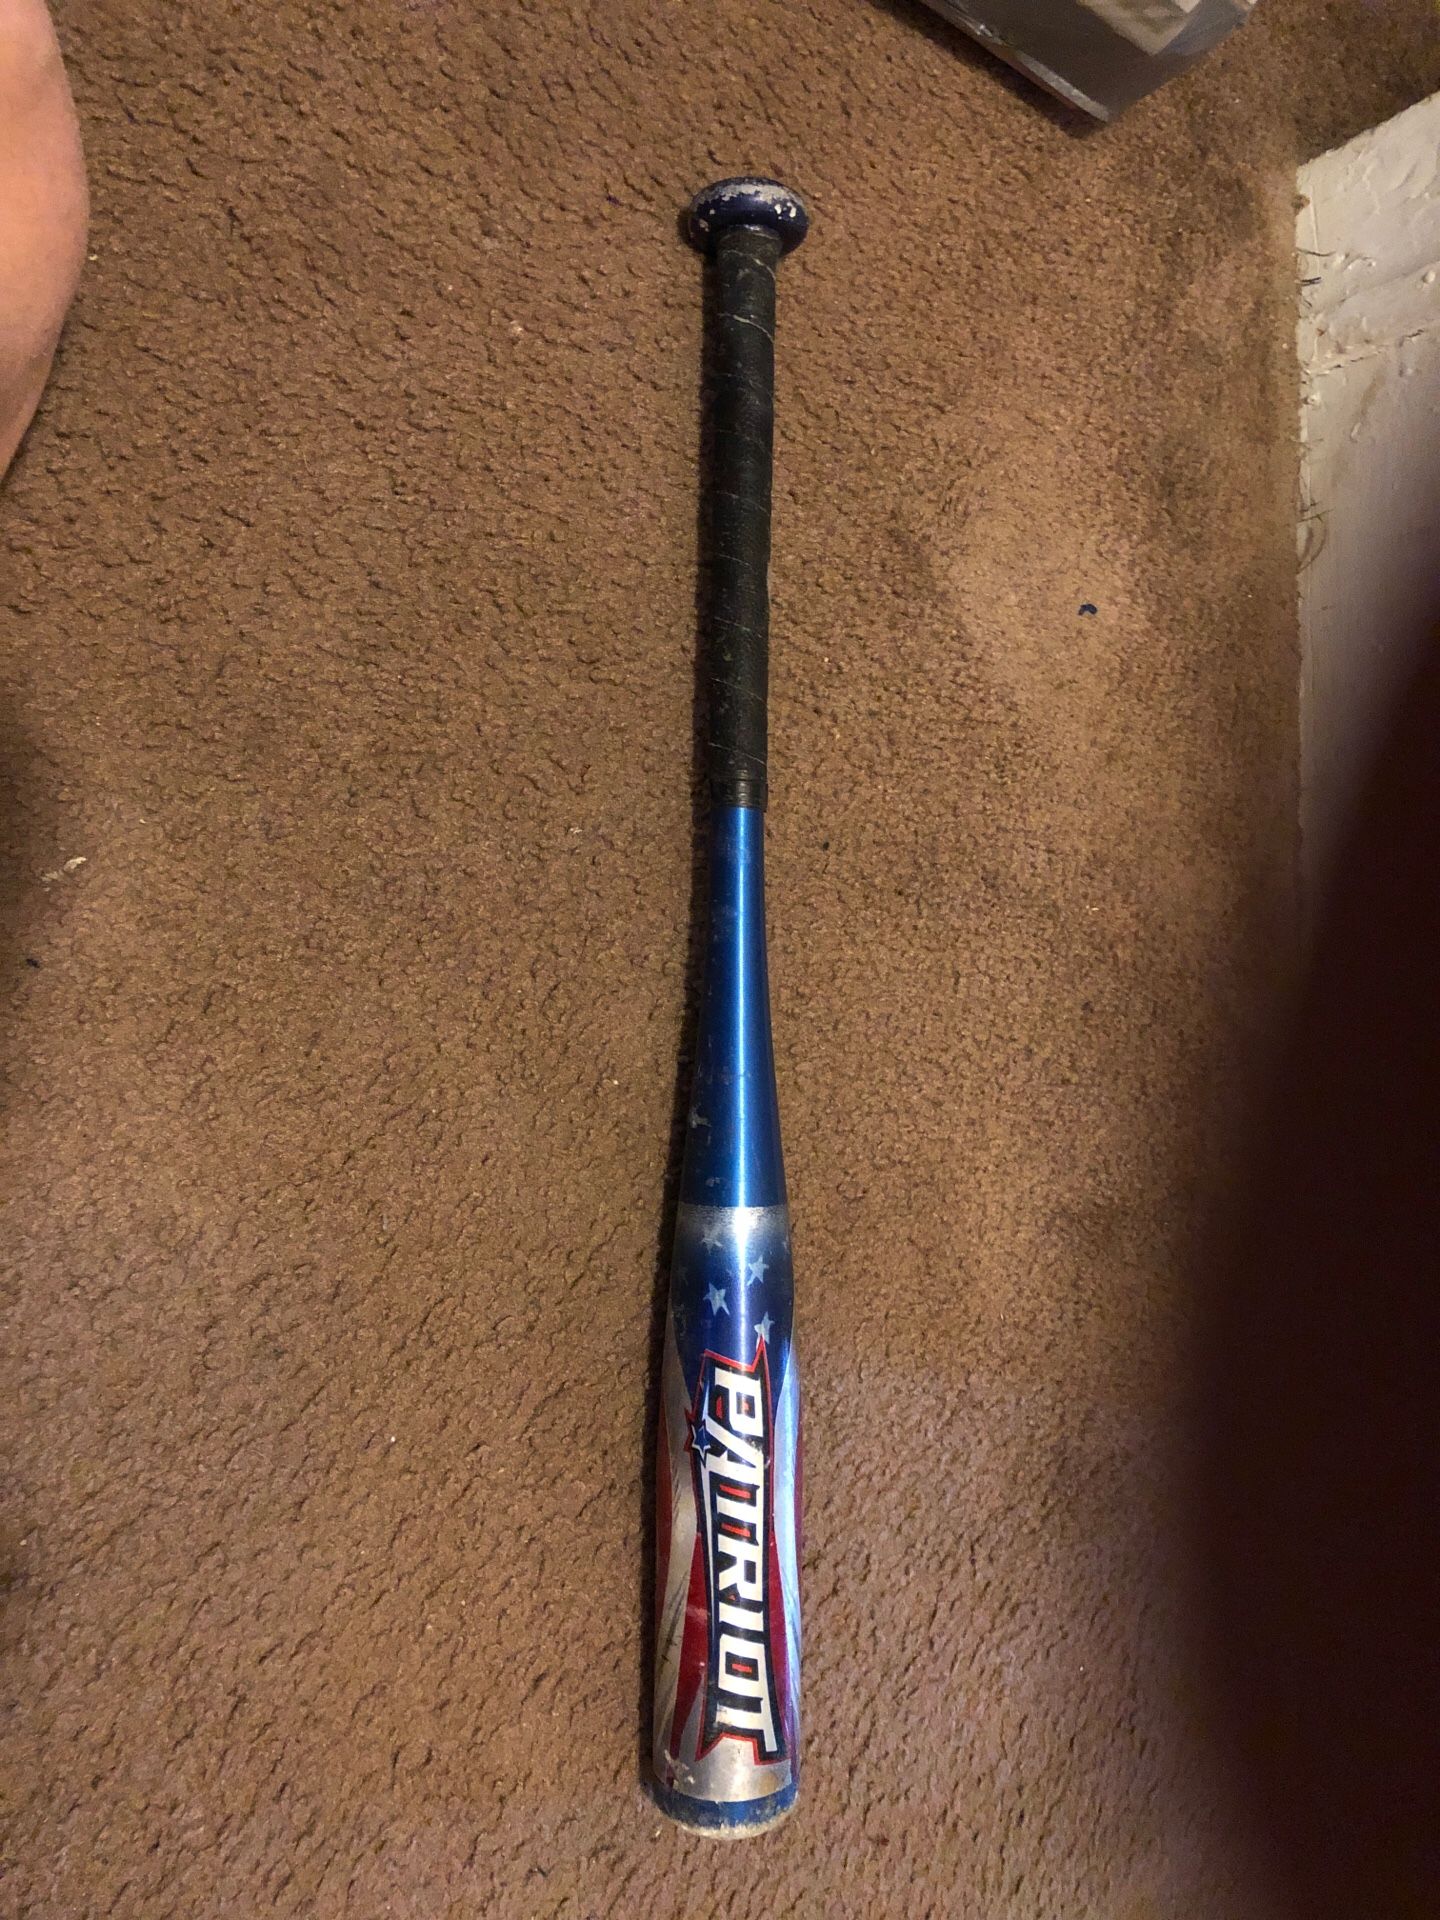 Little league baseball bat